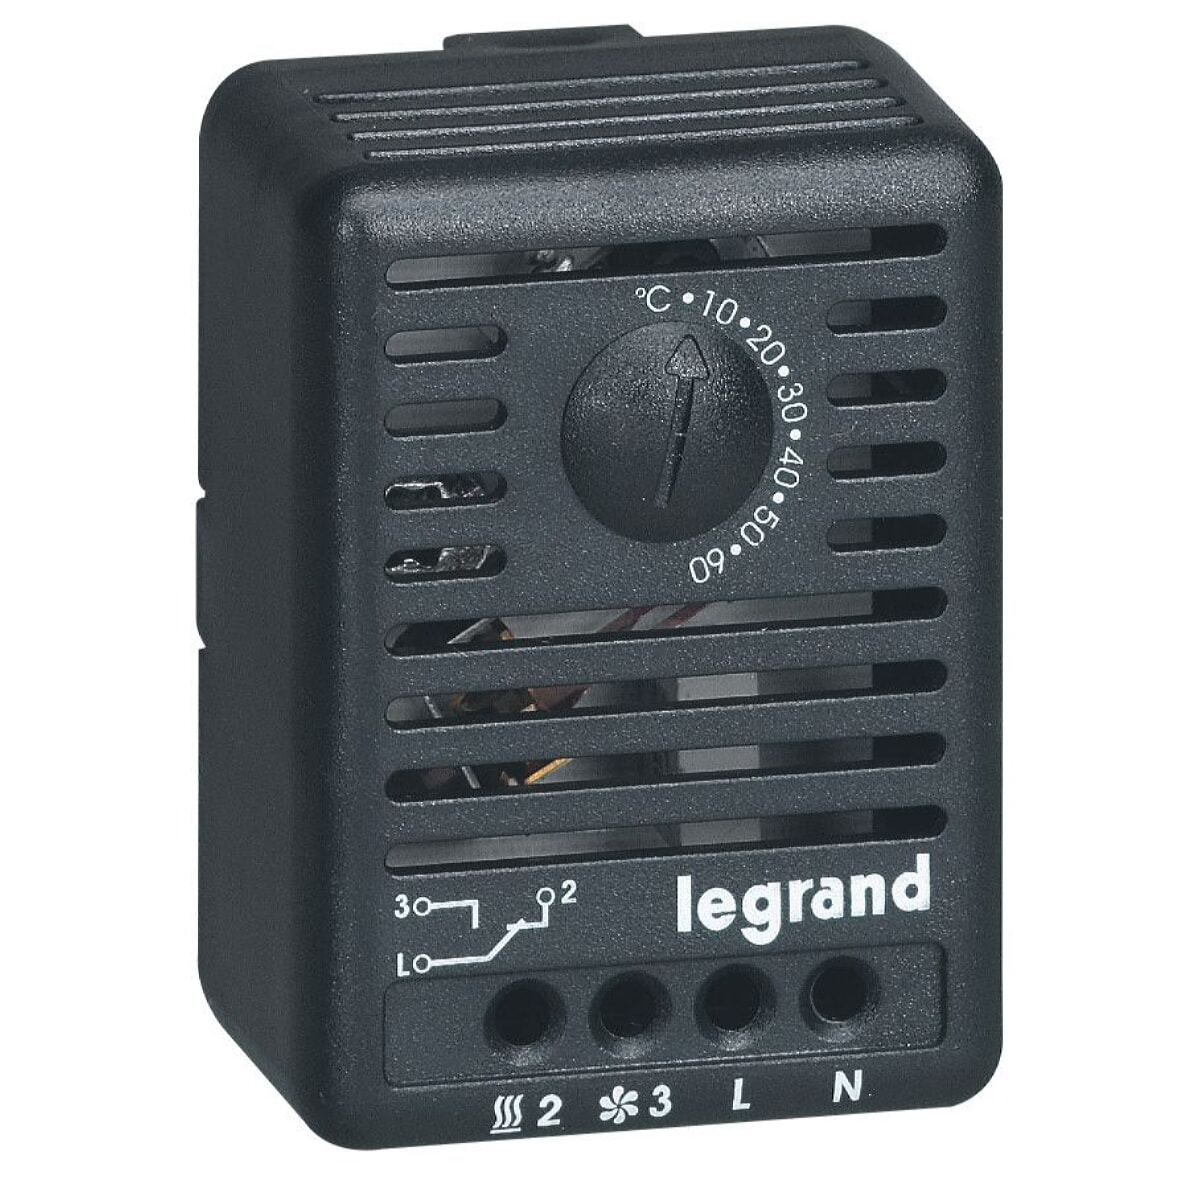 Legrand Thermostat 034847 Altis